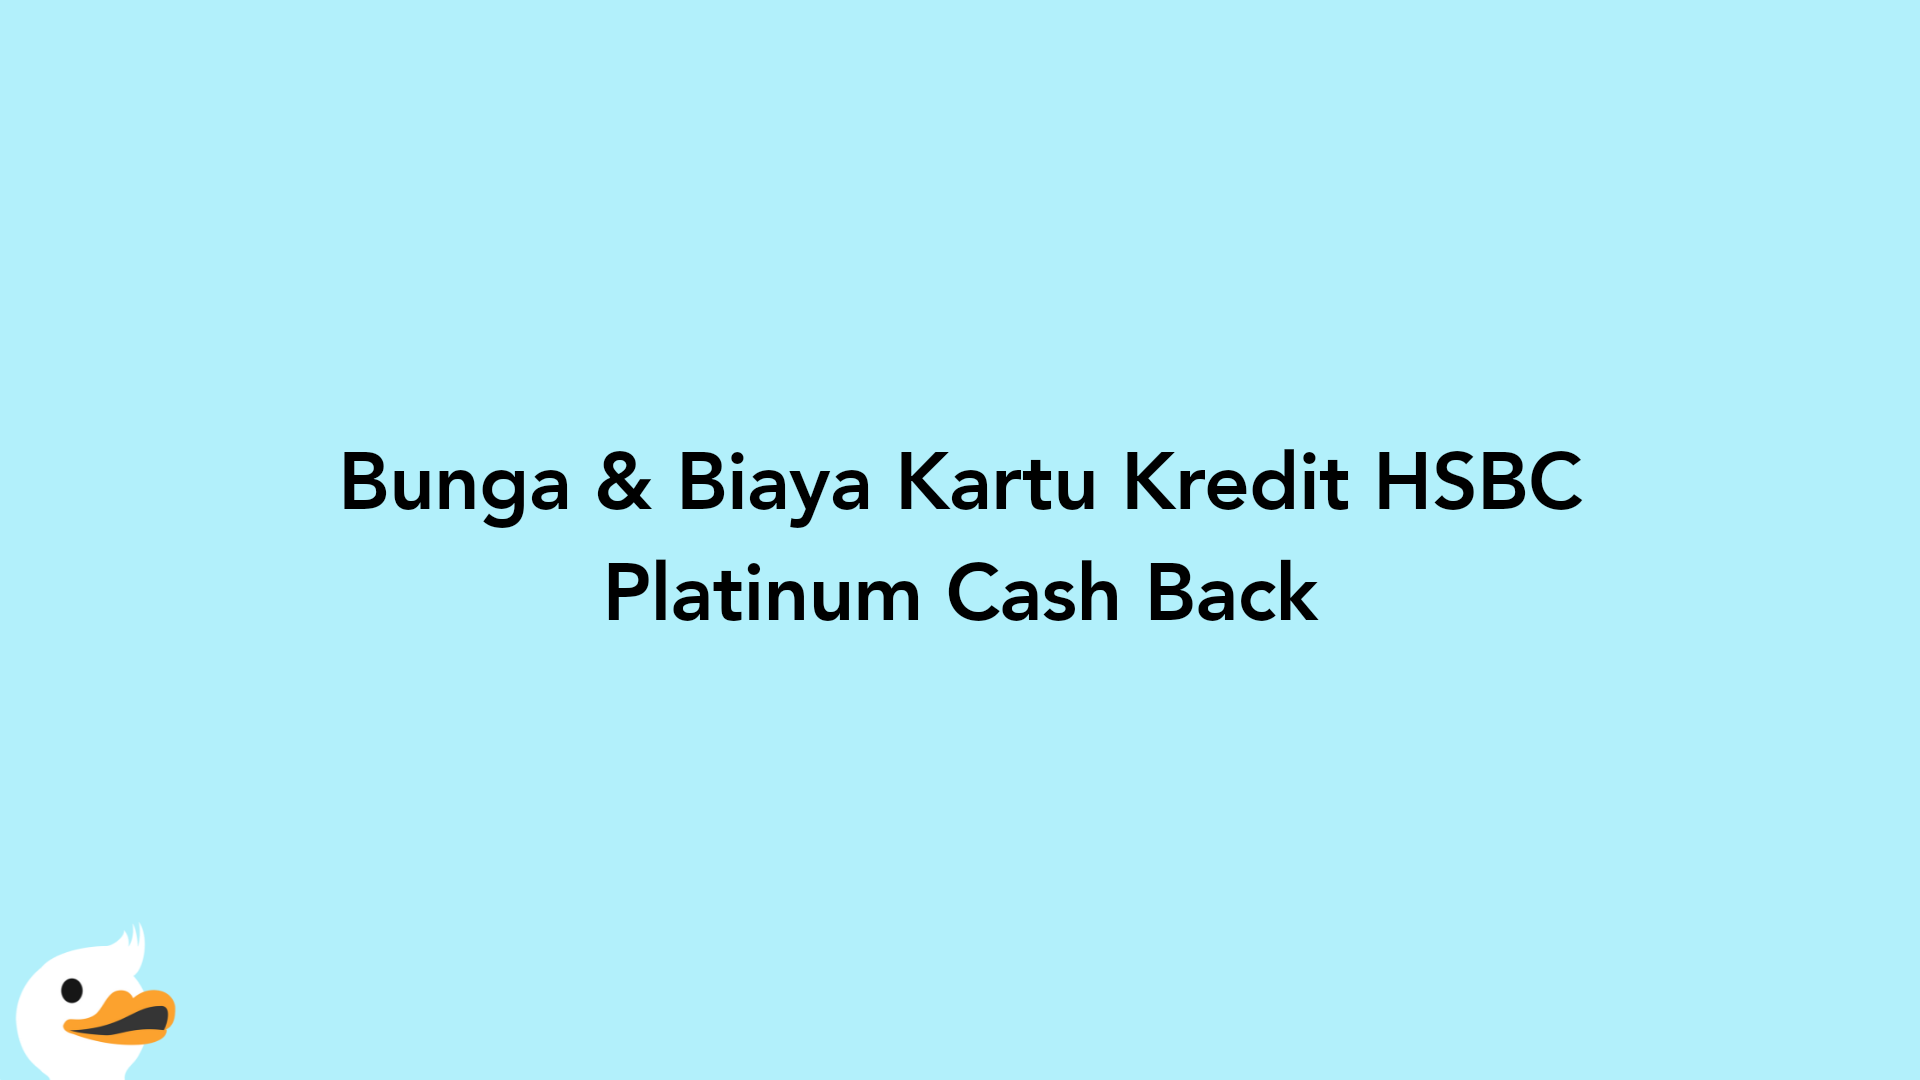 Bunga & Biaya Kartu Kredit HSBC Platinum Cash Back